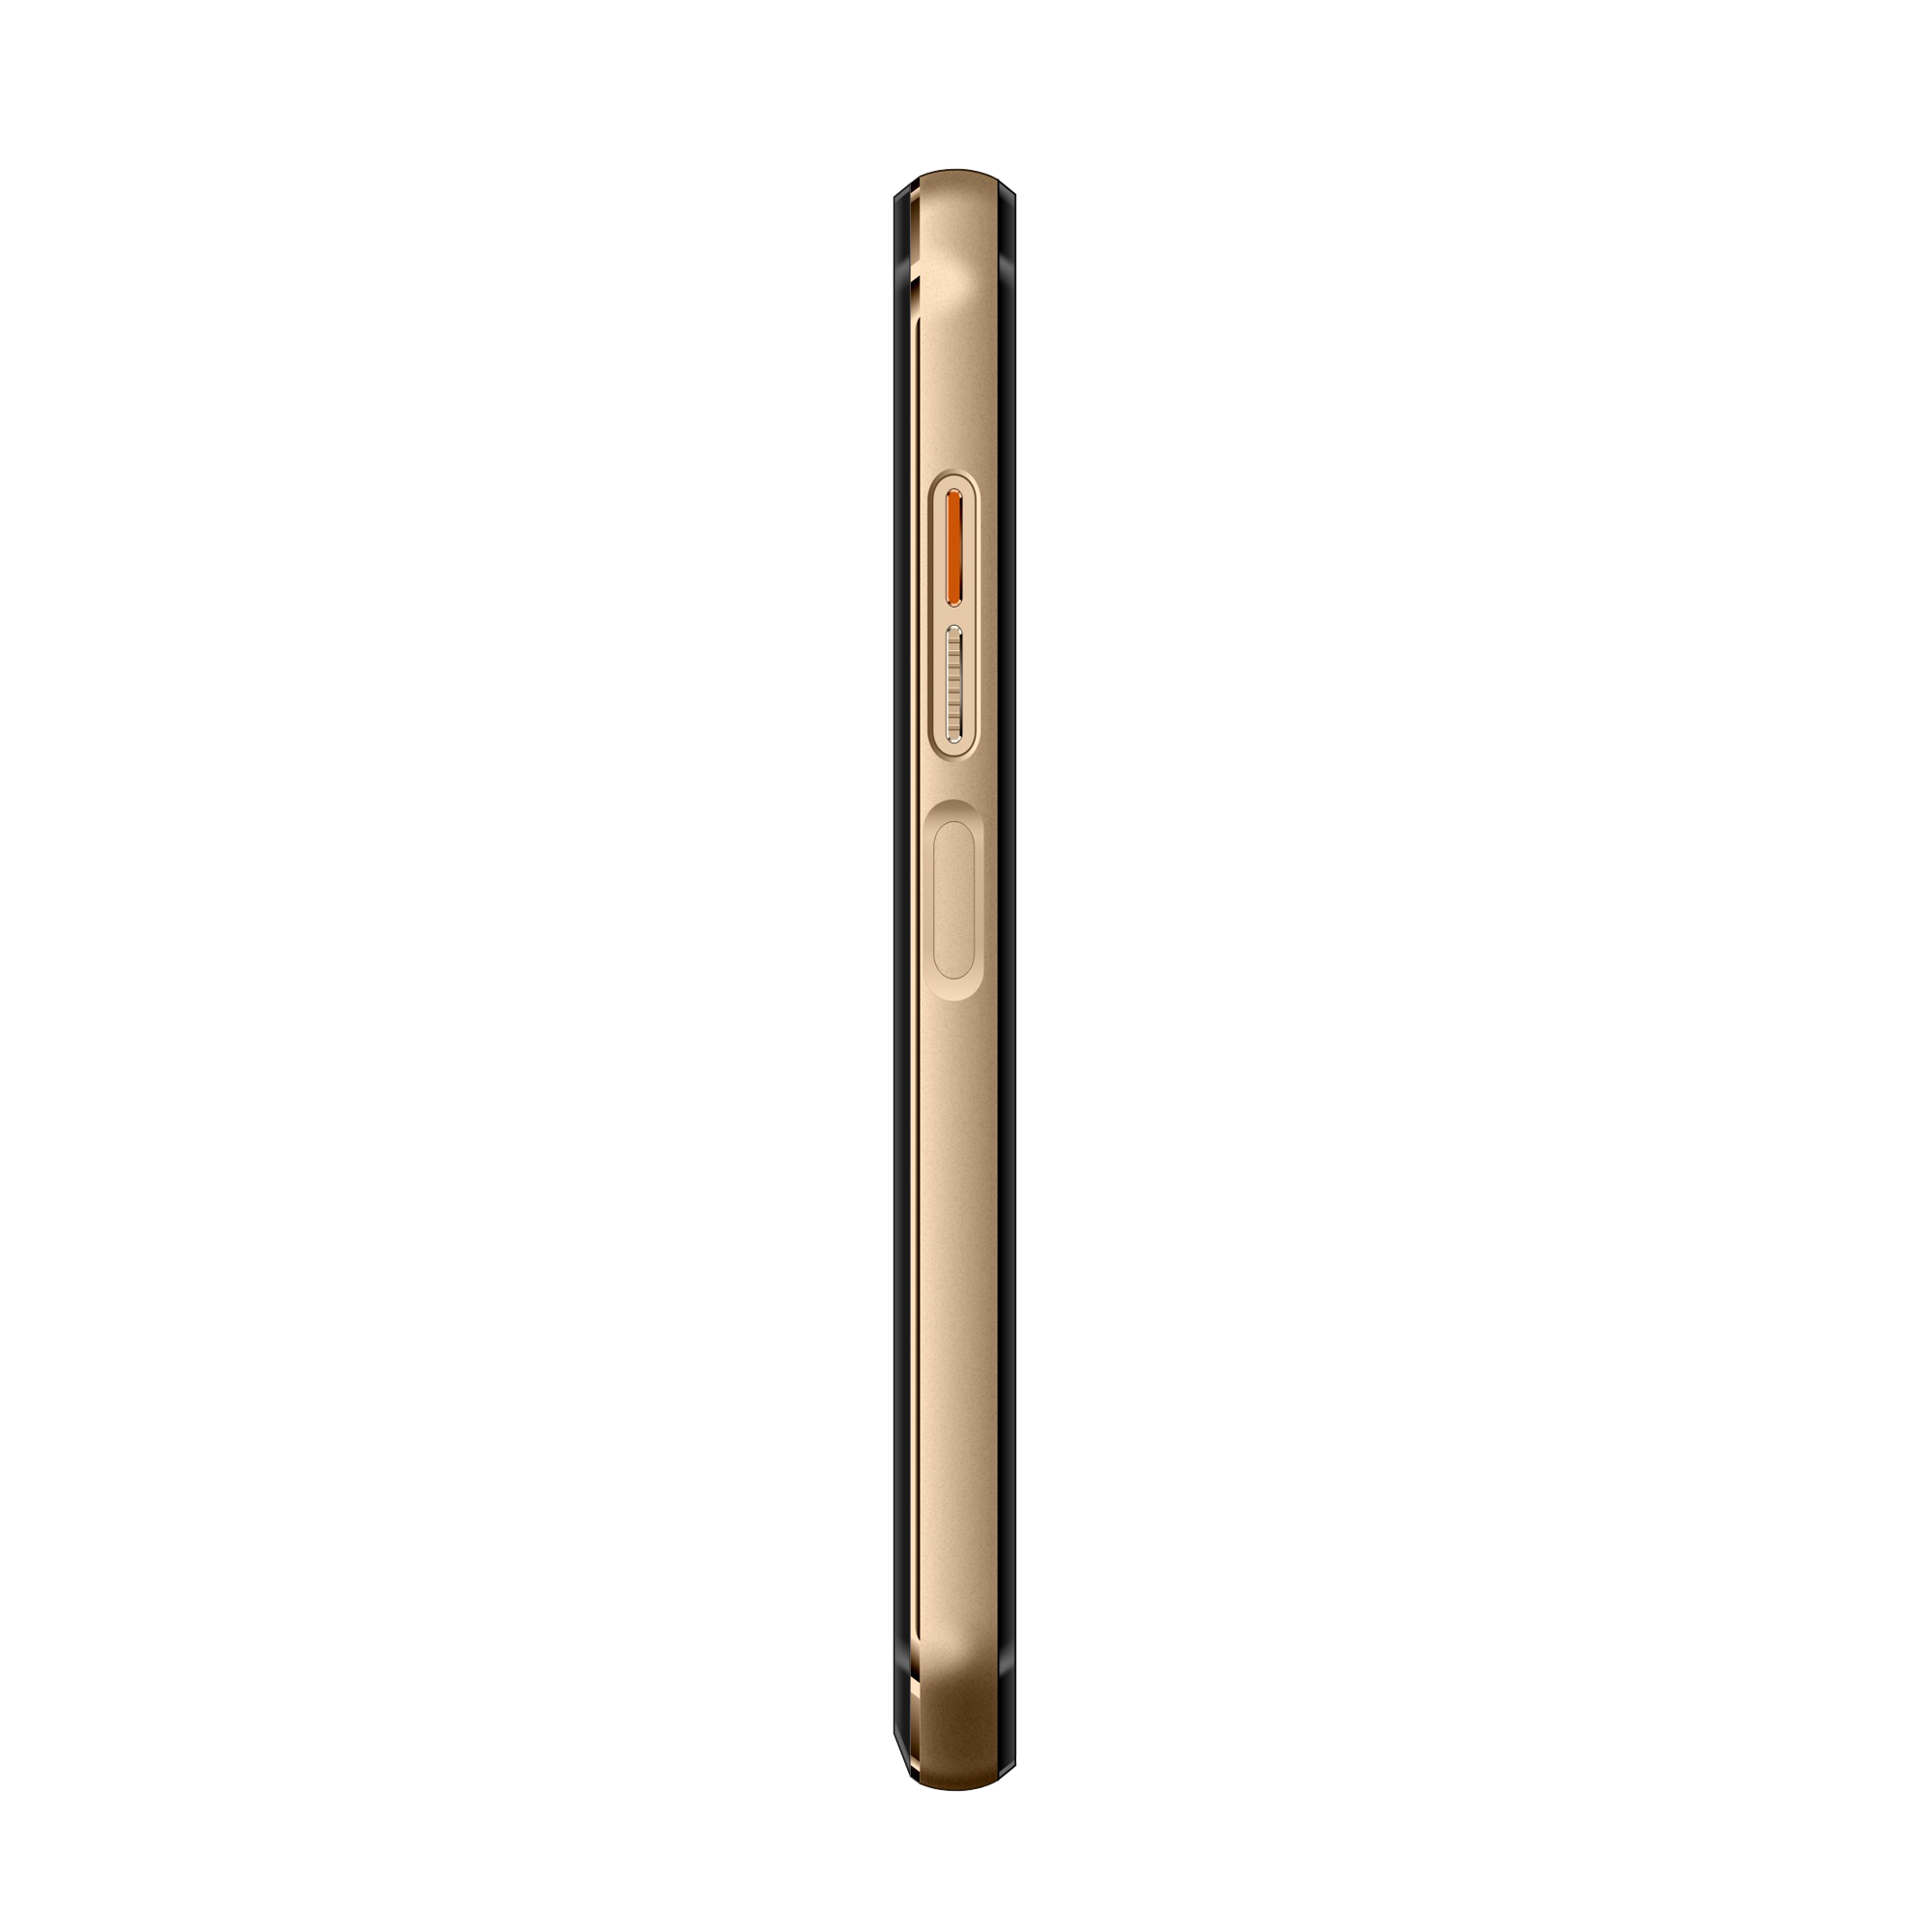 Odolný mobilní telefon Doogee S30 Dual SIM Gold